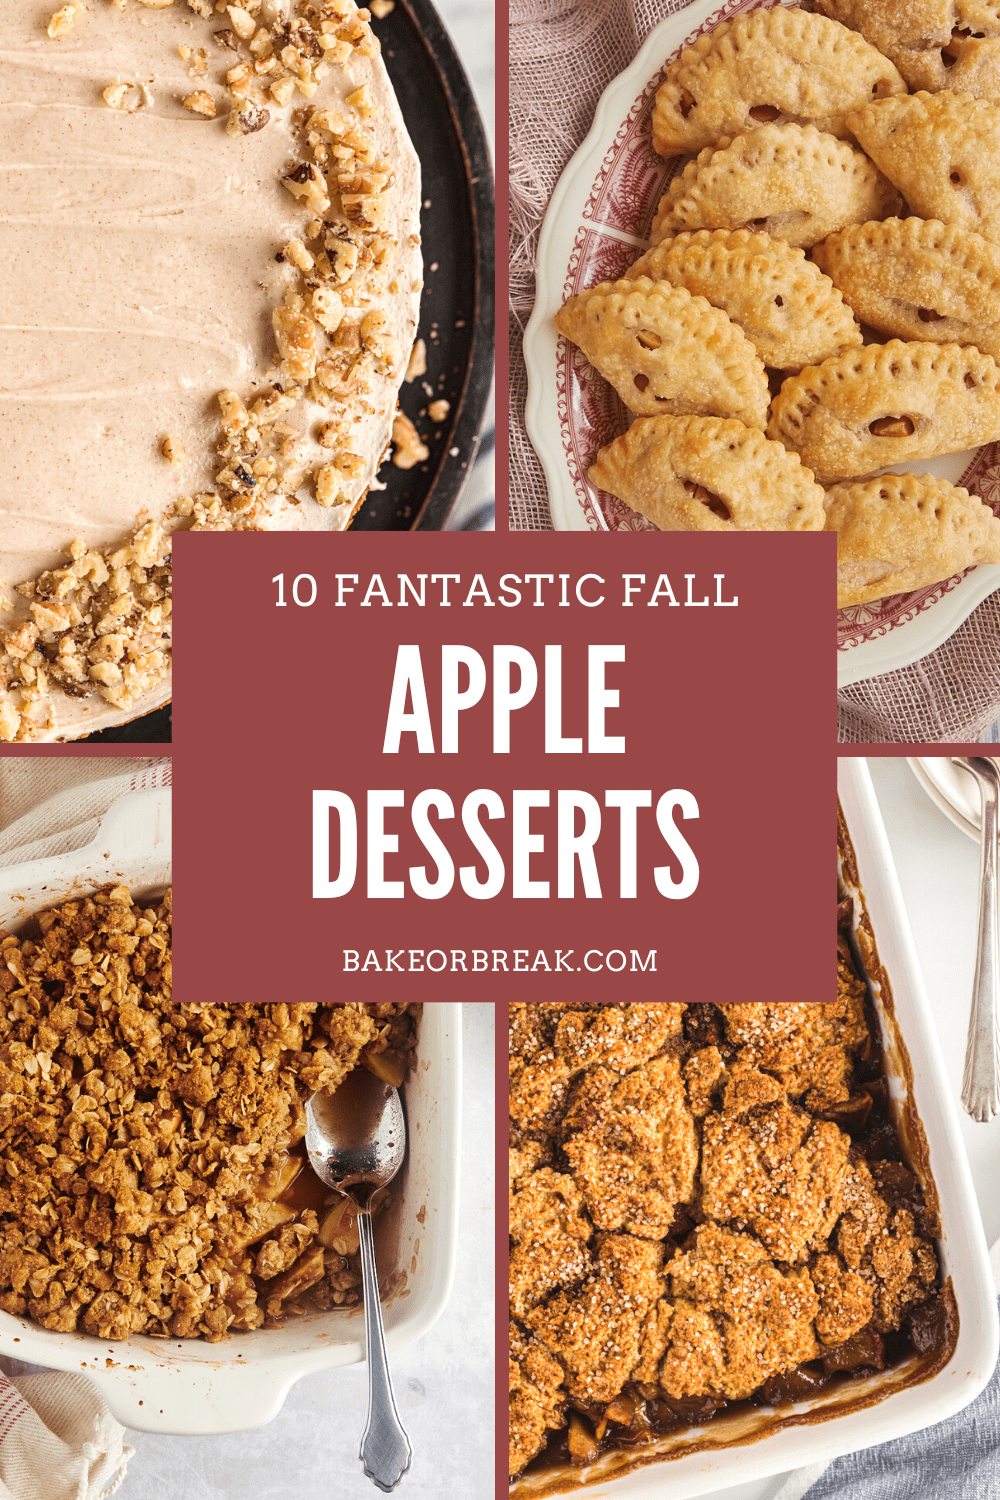 10 Fantastic Fall Apple Desserts bakeorbreak.com